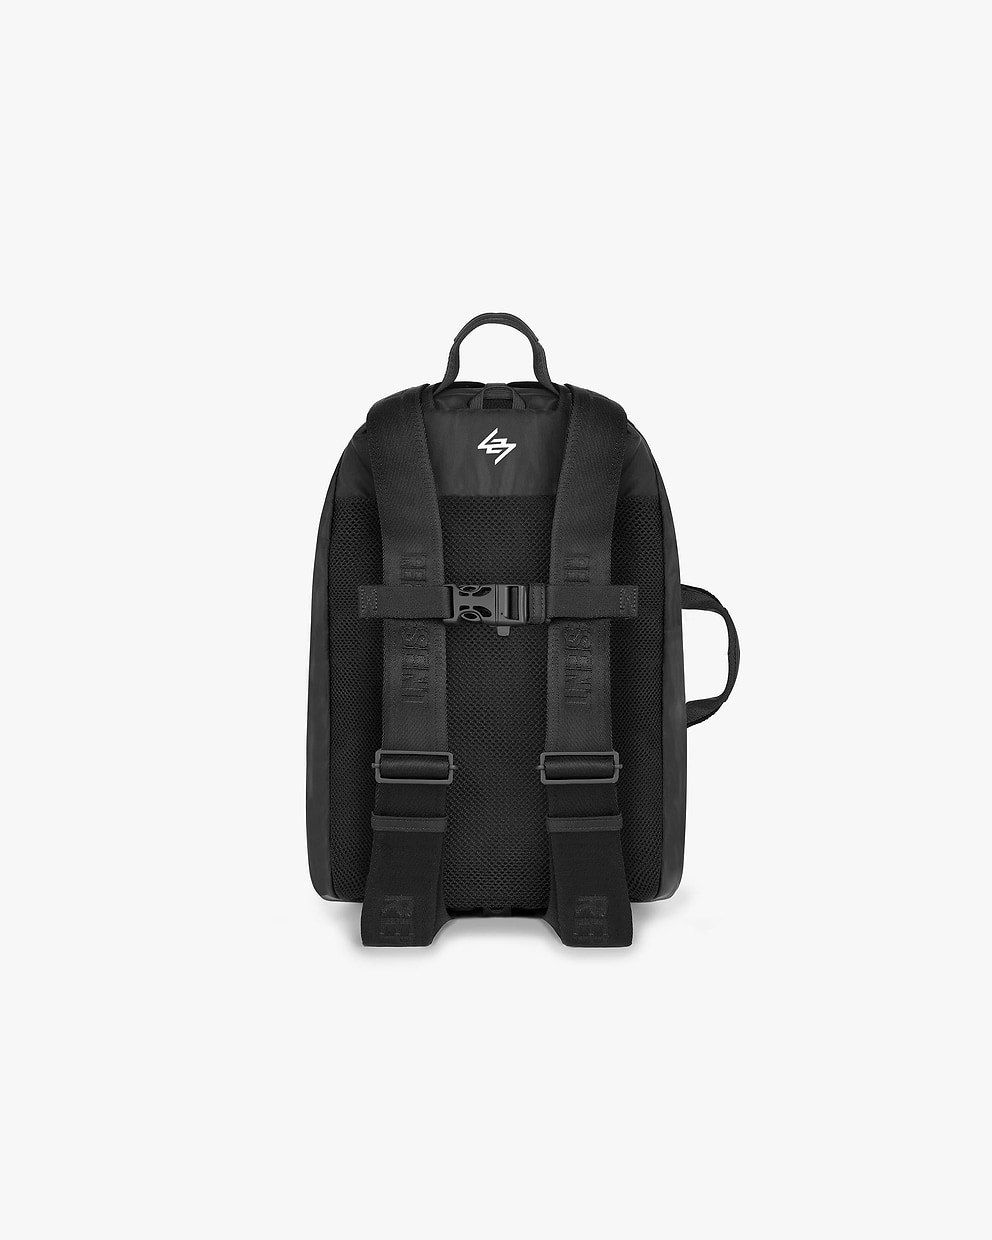 Team 247 Backpack - Black